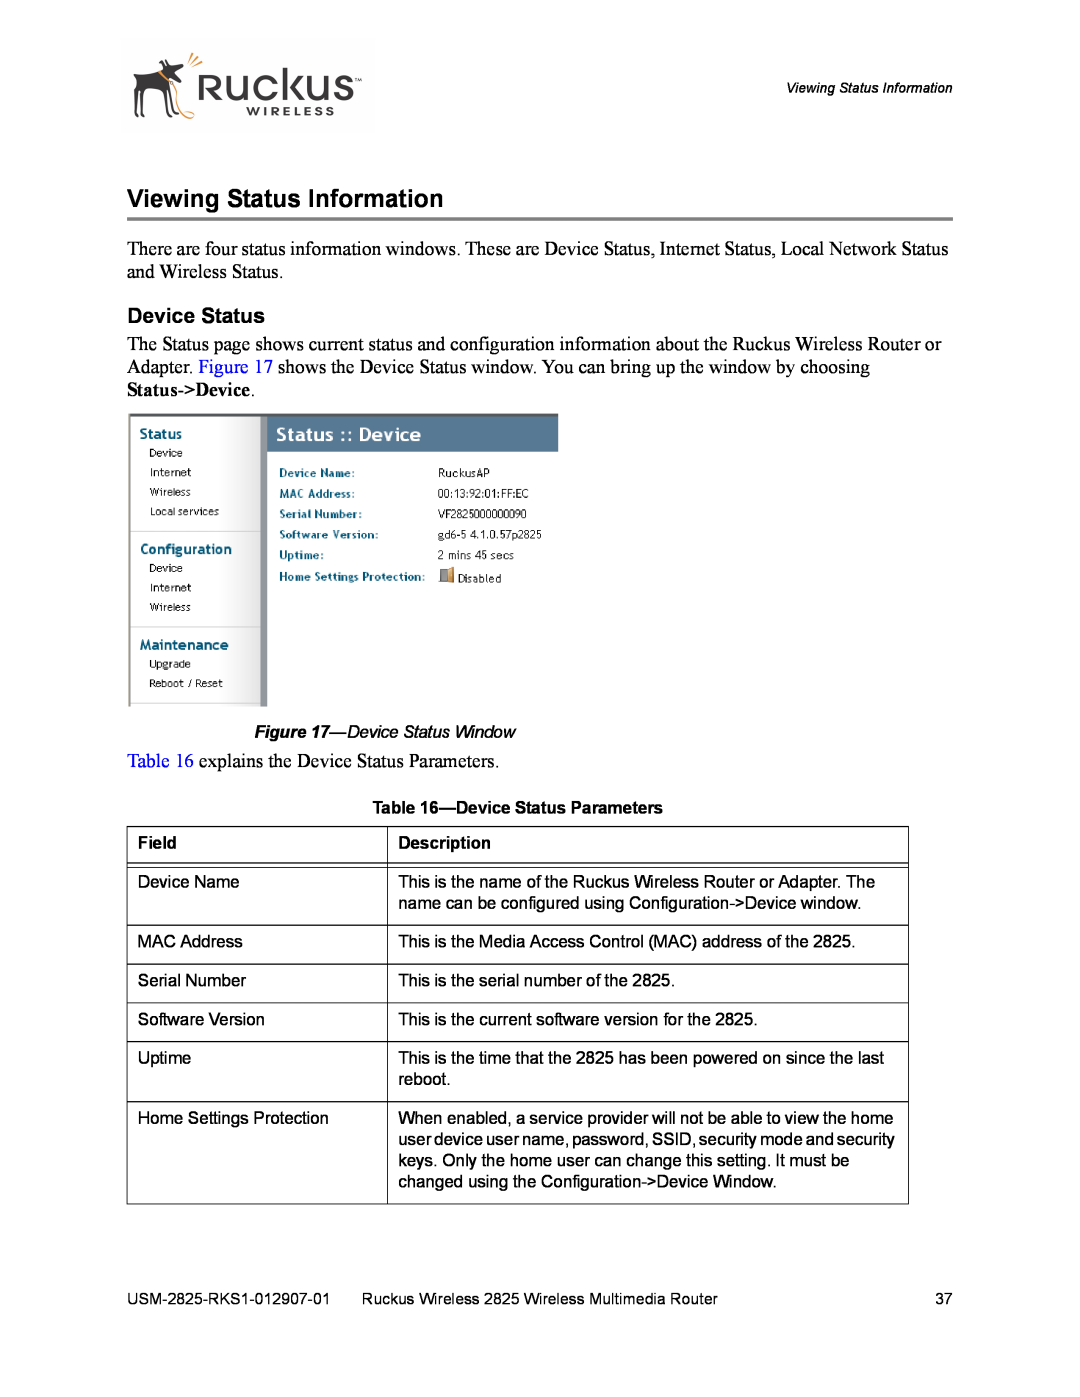 Ruckus Wireless 2111, 2825 manual Viewing Status Information, explains the Device Status Parameters 